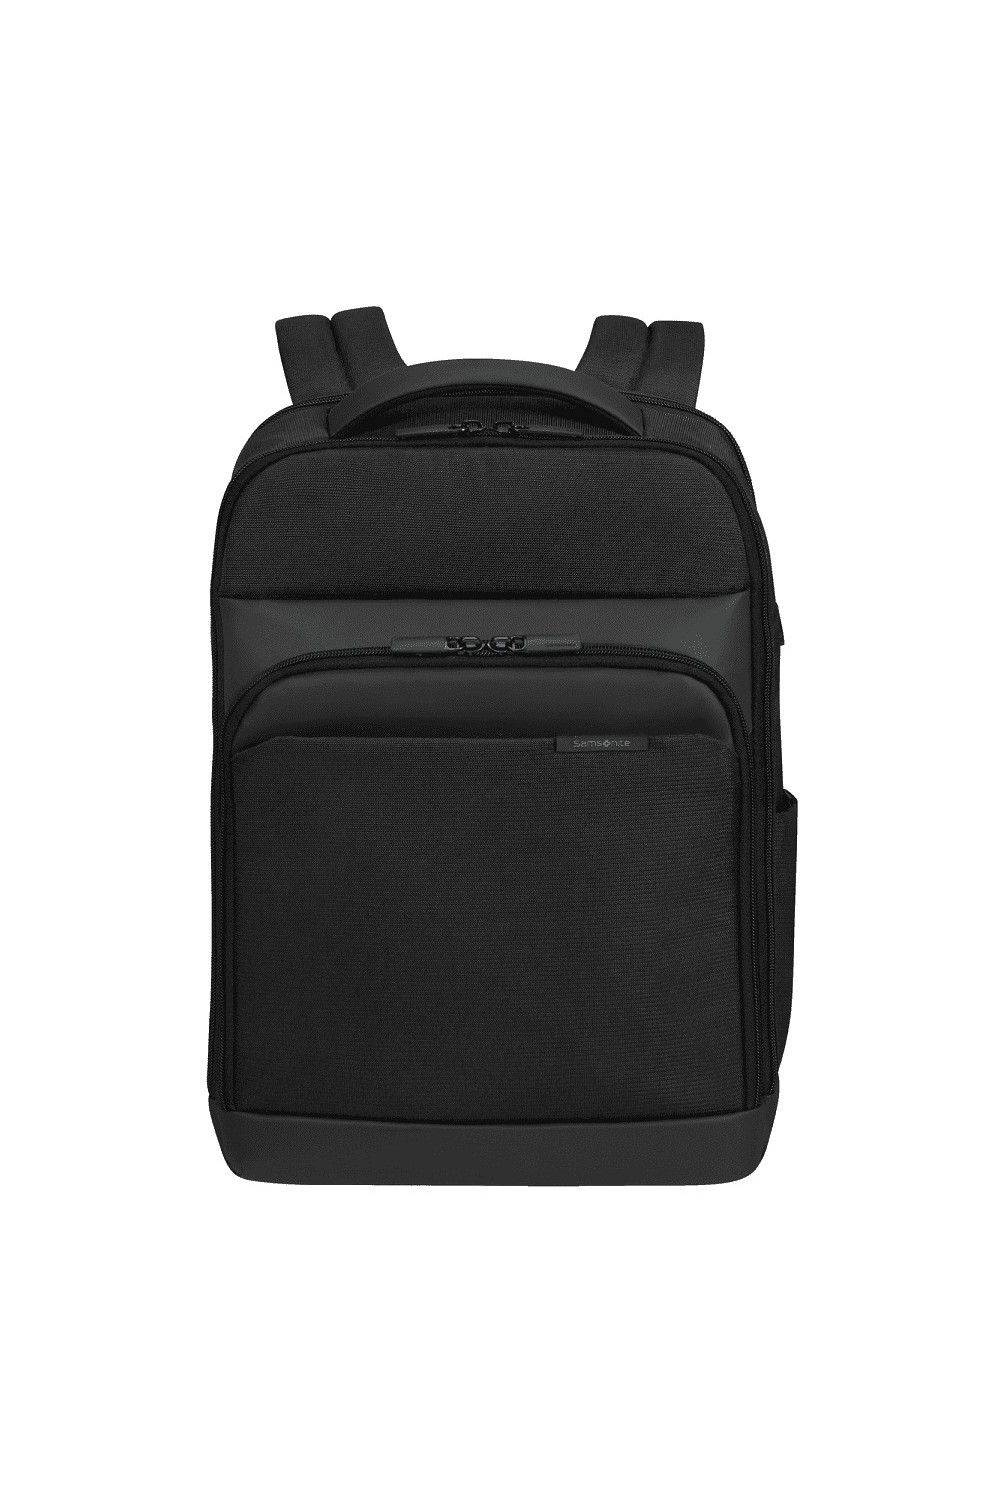 Samsonite Mysight laptop backpack 15.6 inches